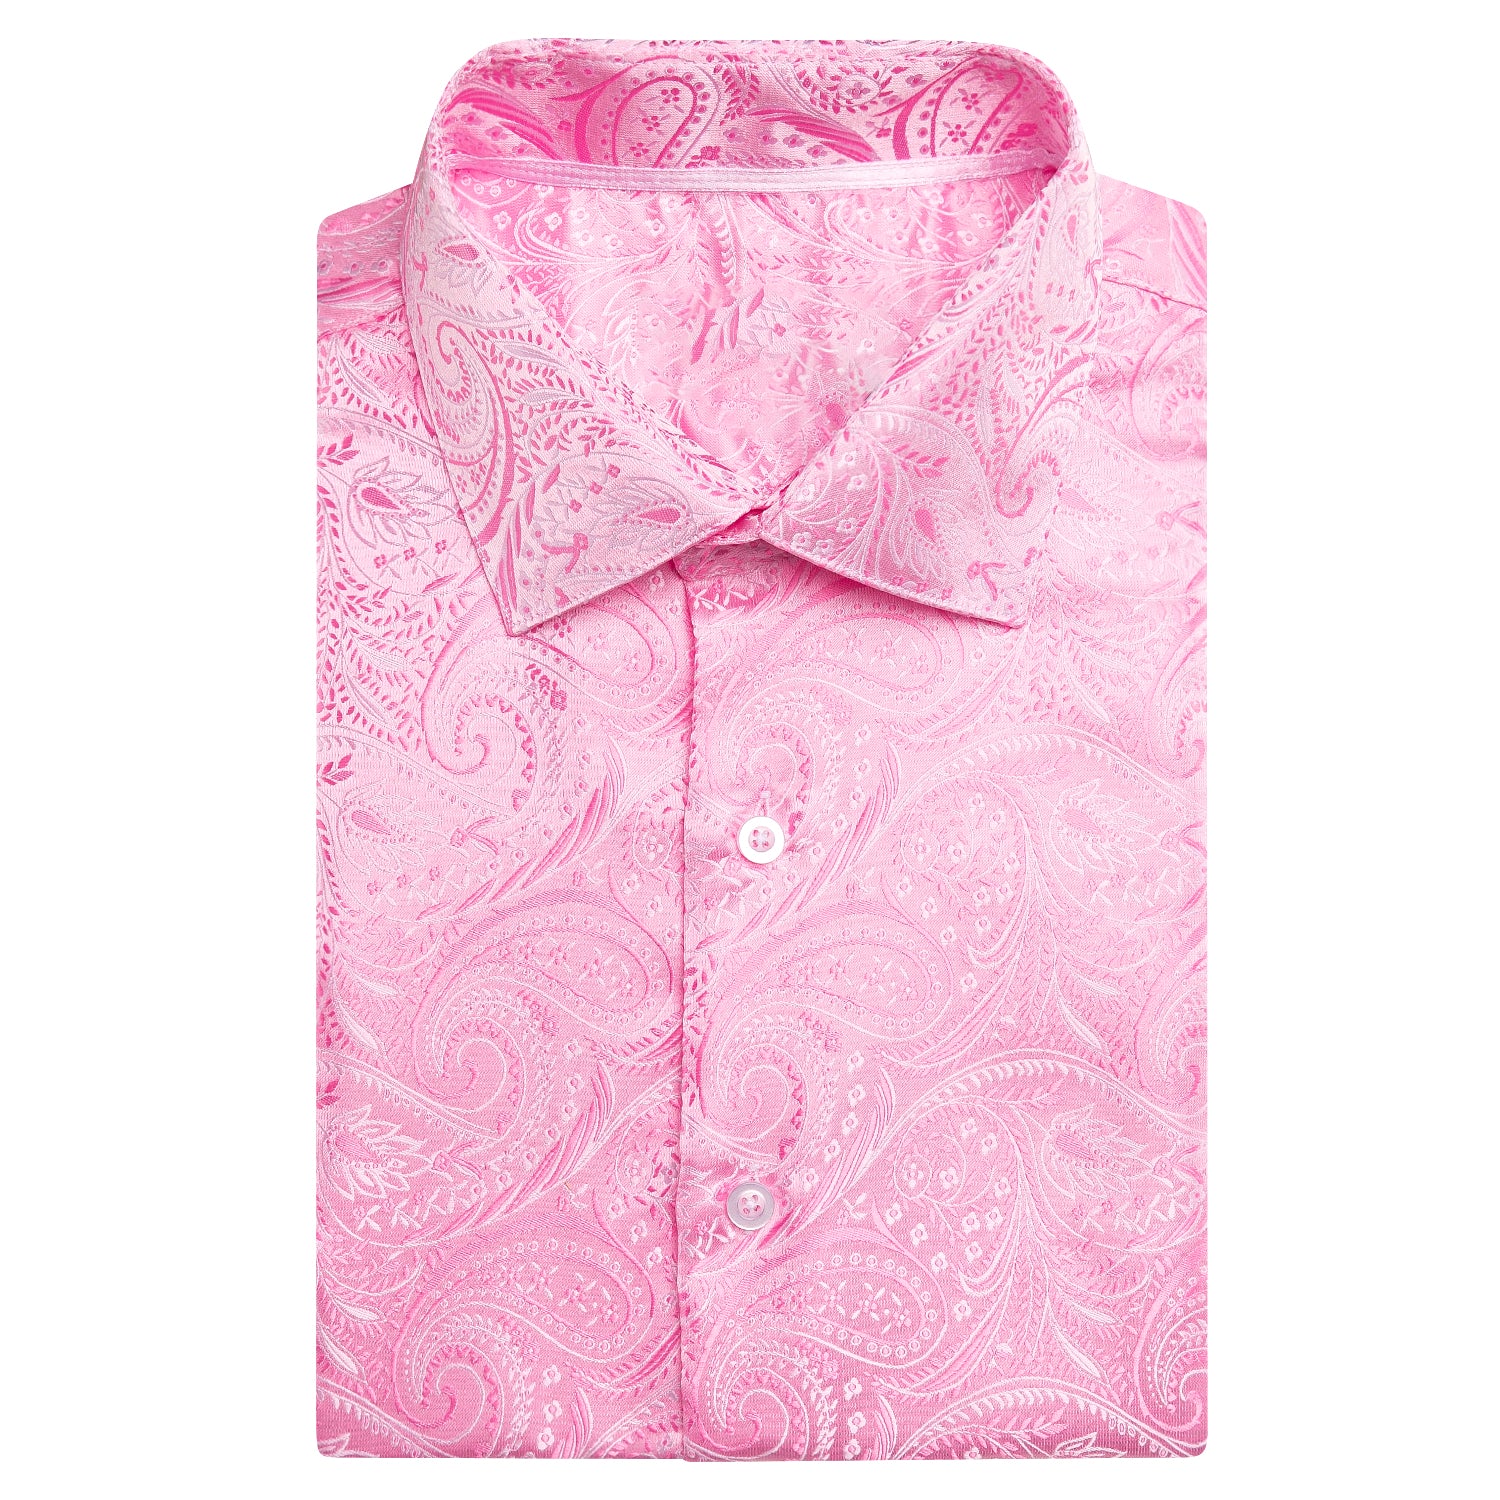 Baby Pink Paisley Silk Men's Short Sleeve Shirt